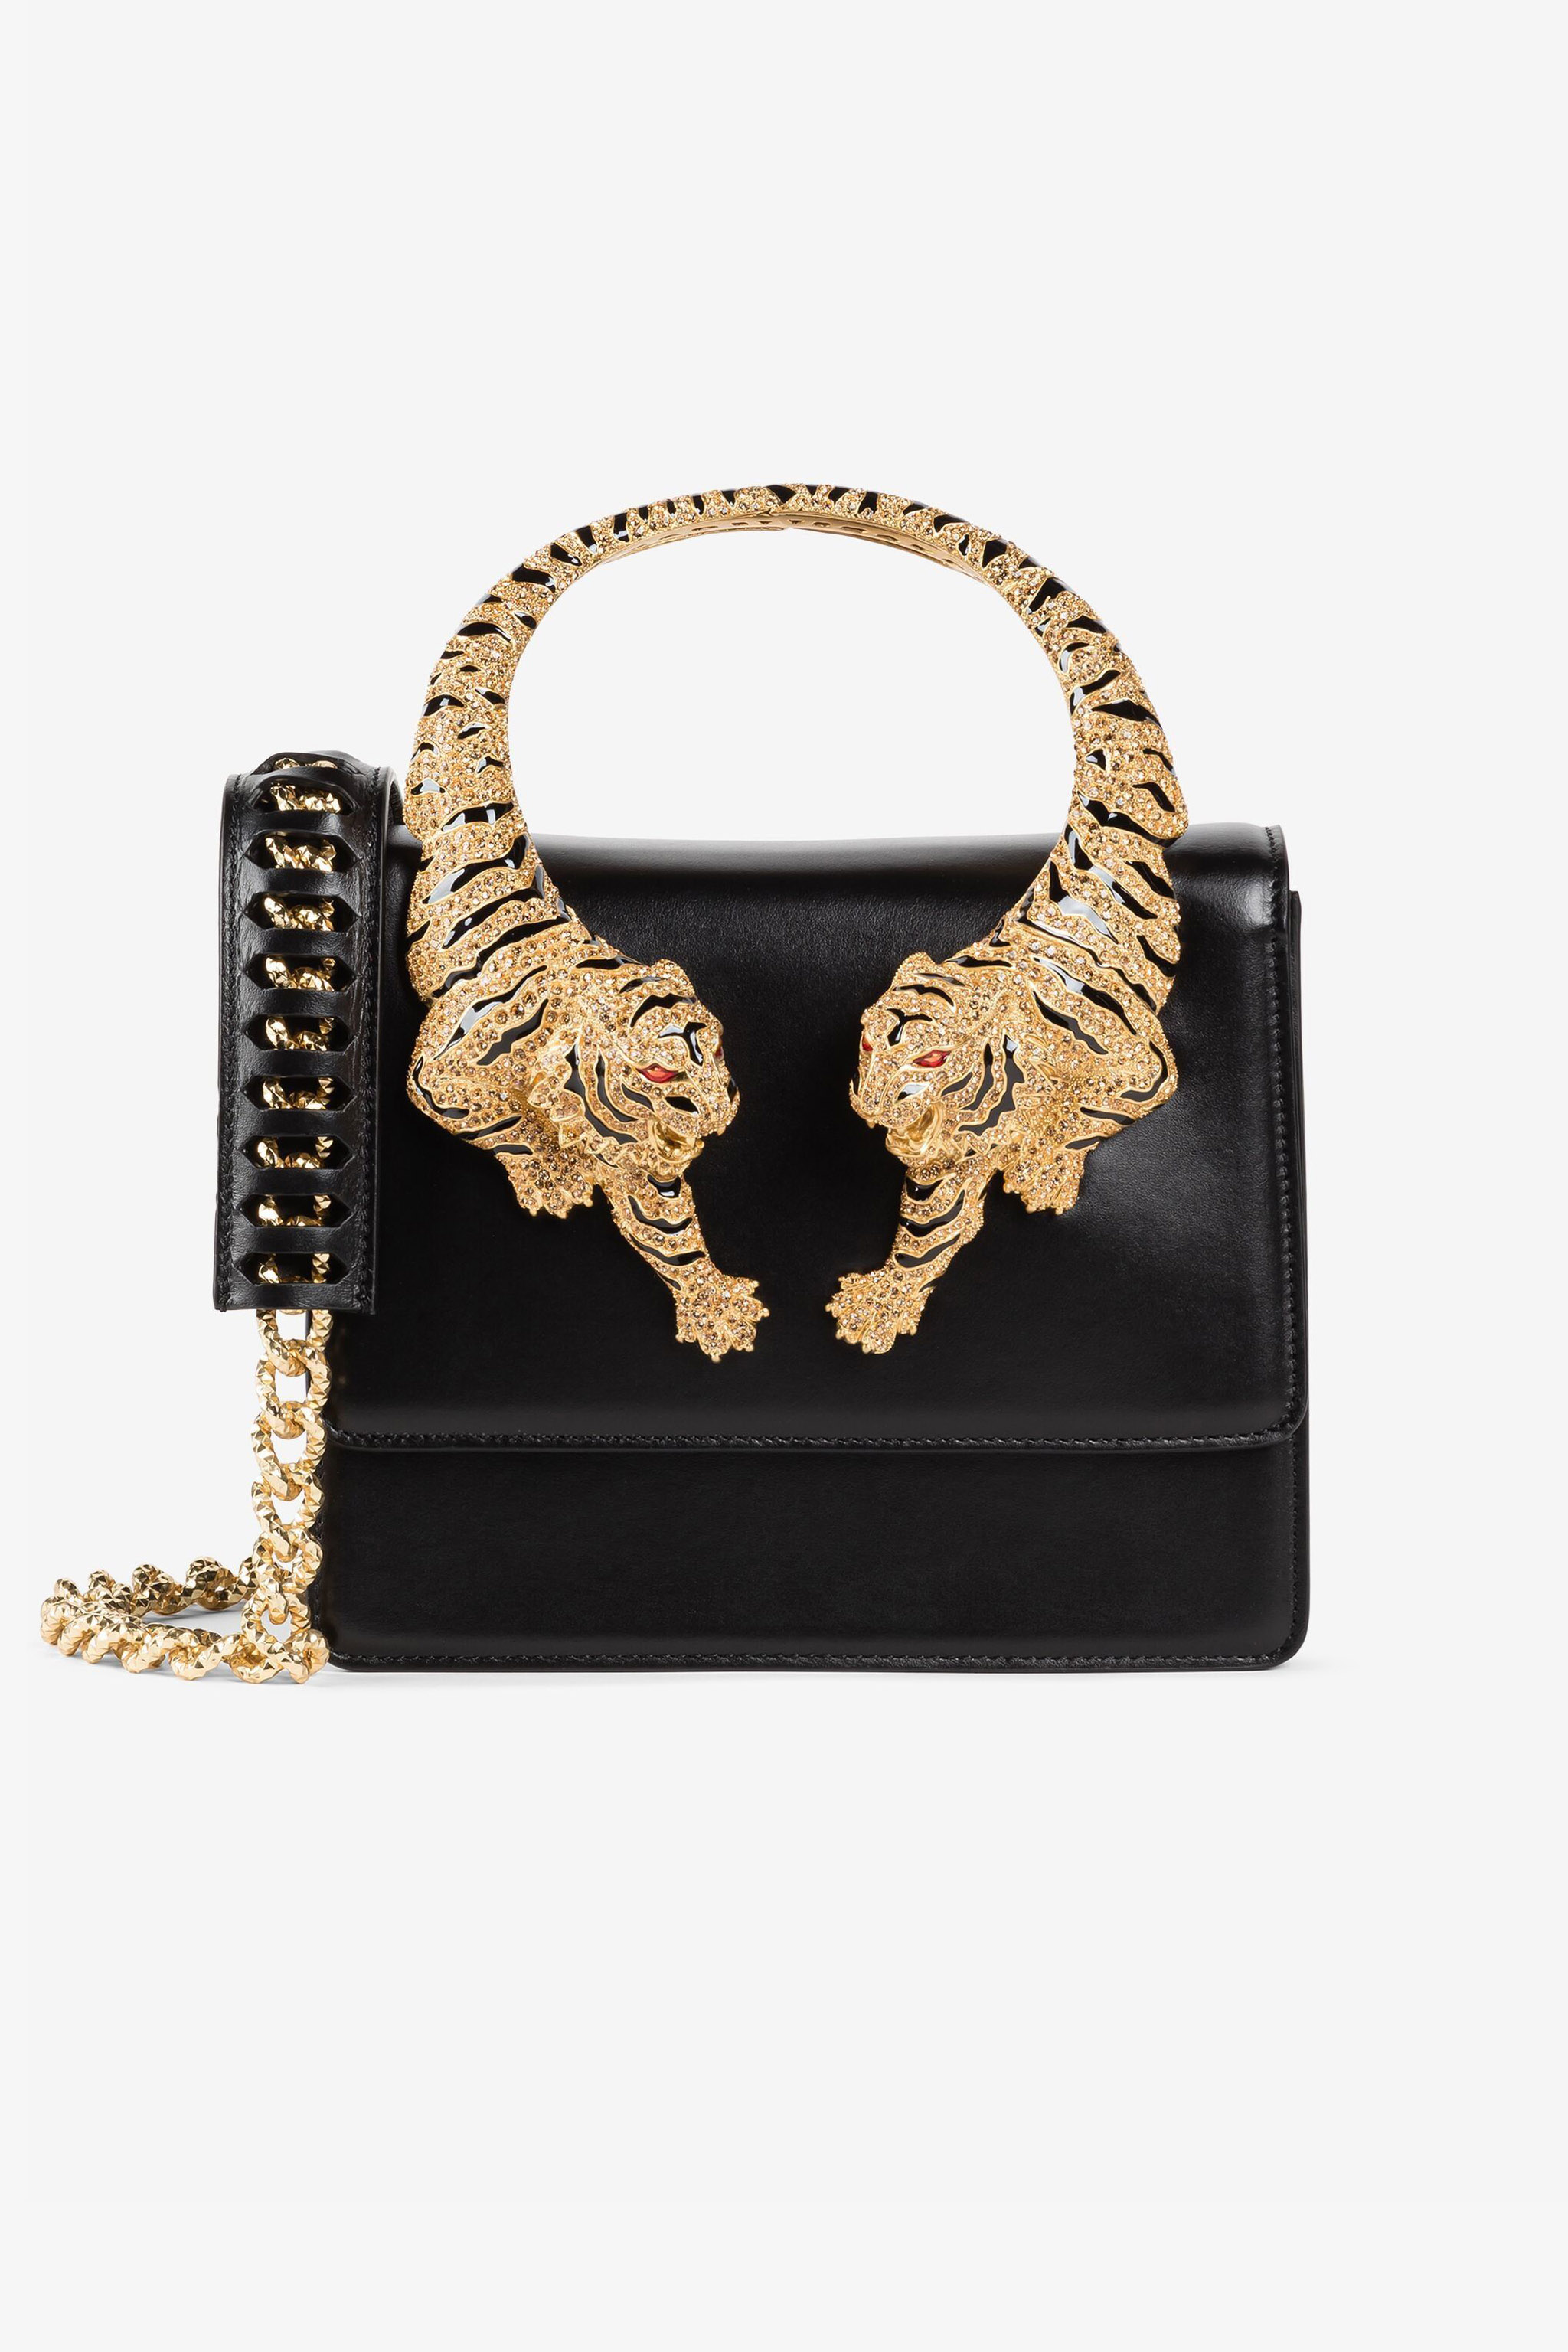 Roberto Cavalli Regina Black Leather And Suede Medium Flap Shoulder Bag,  $1,640 | Forzieri | Lookastic